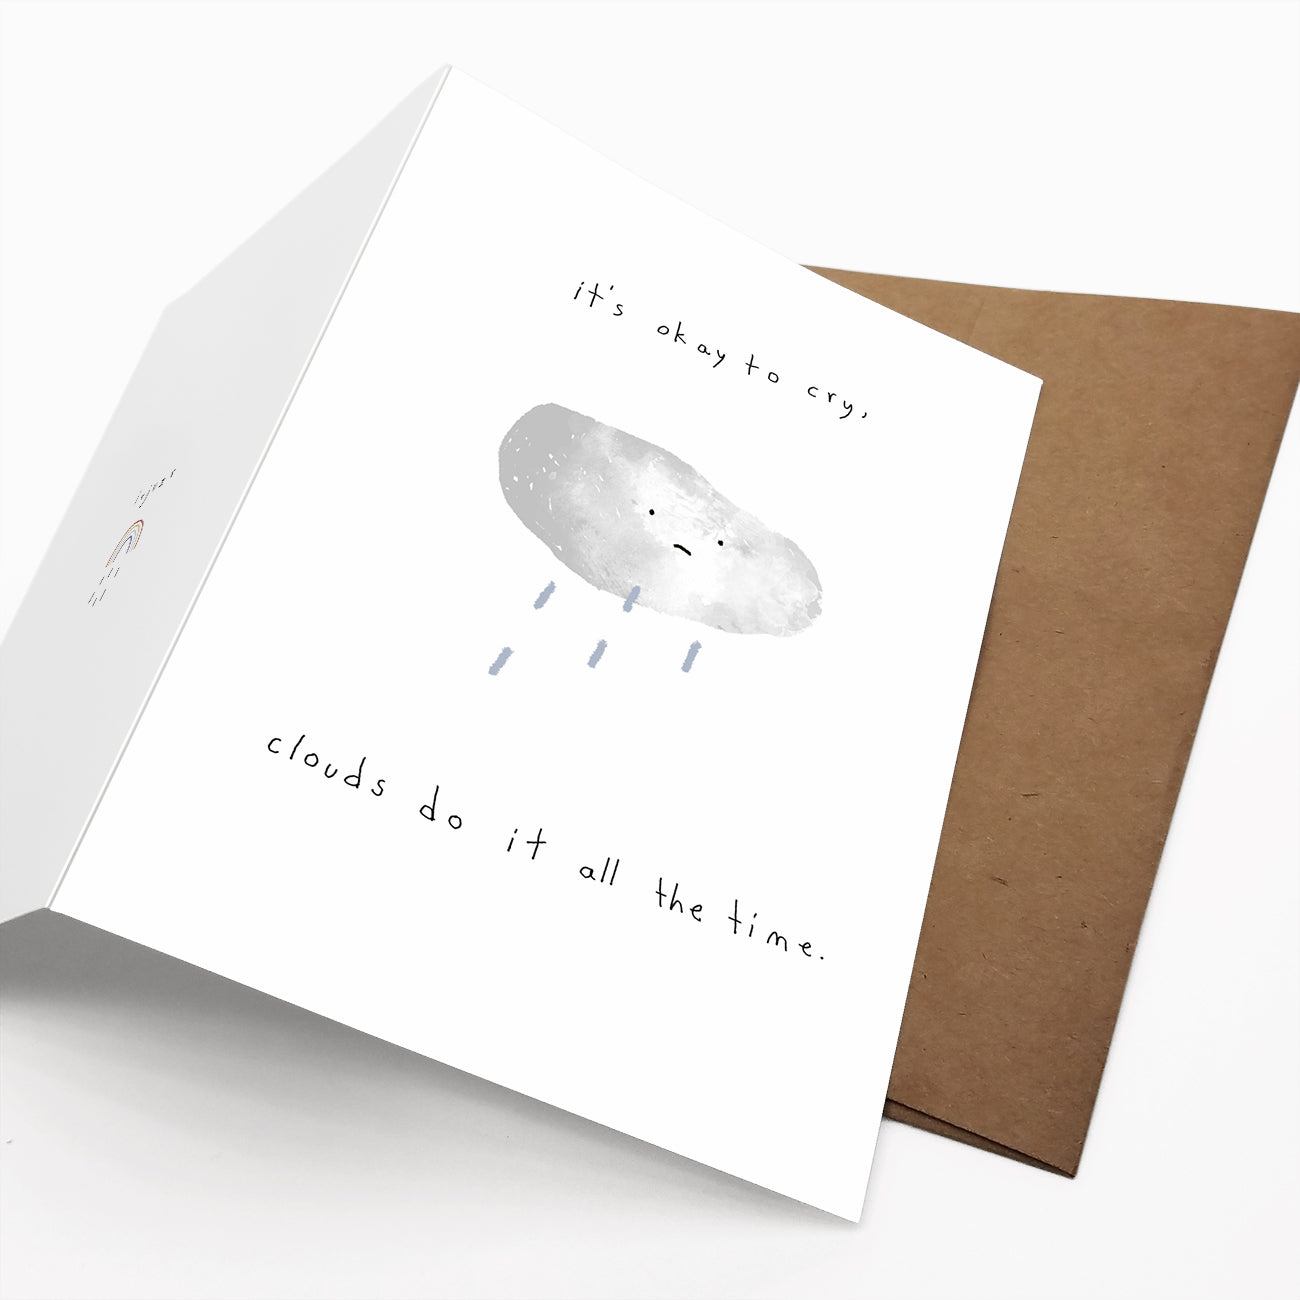 Sad Cloud, It's Okay to Cry | Eco-Friendly Greeting Card